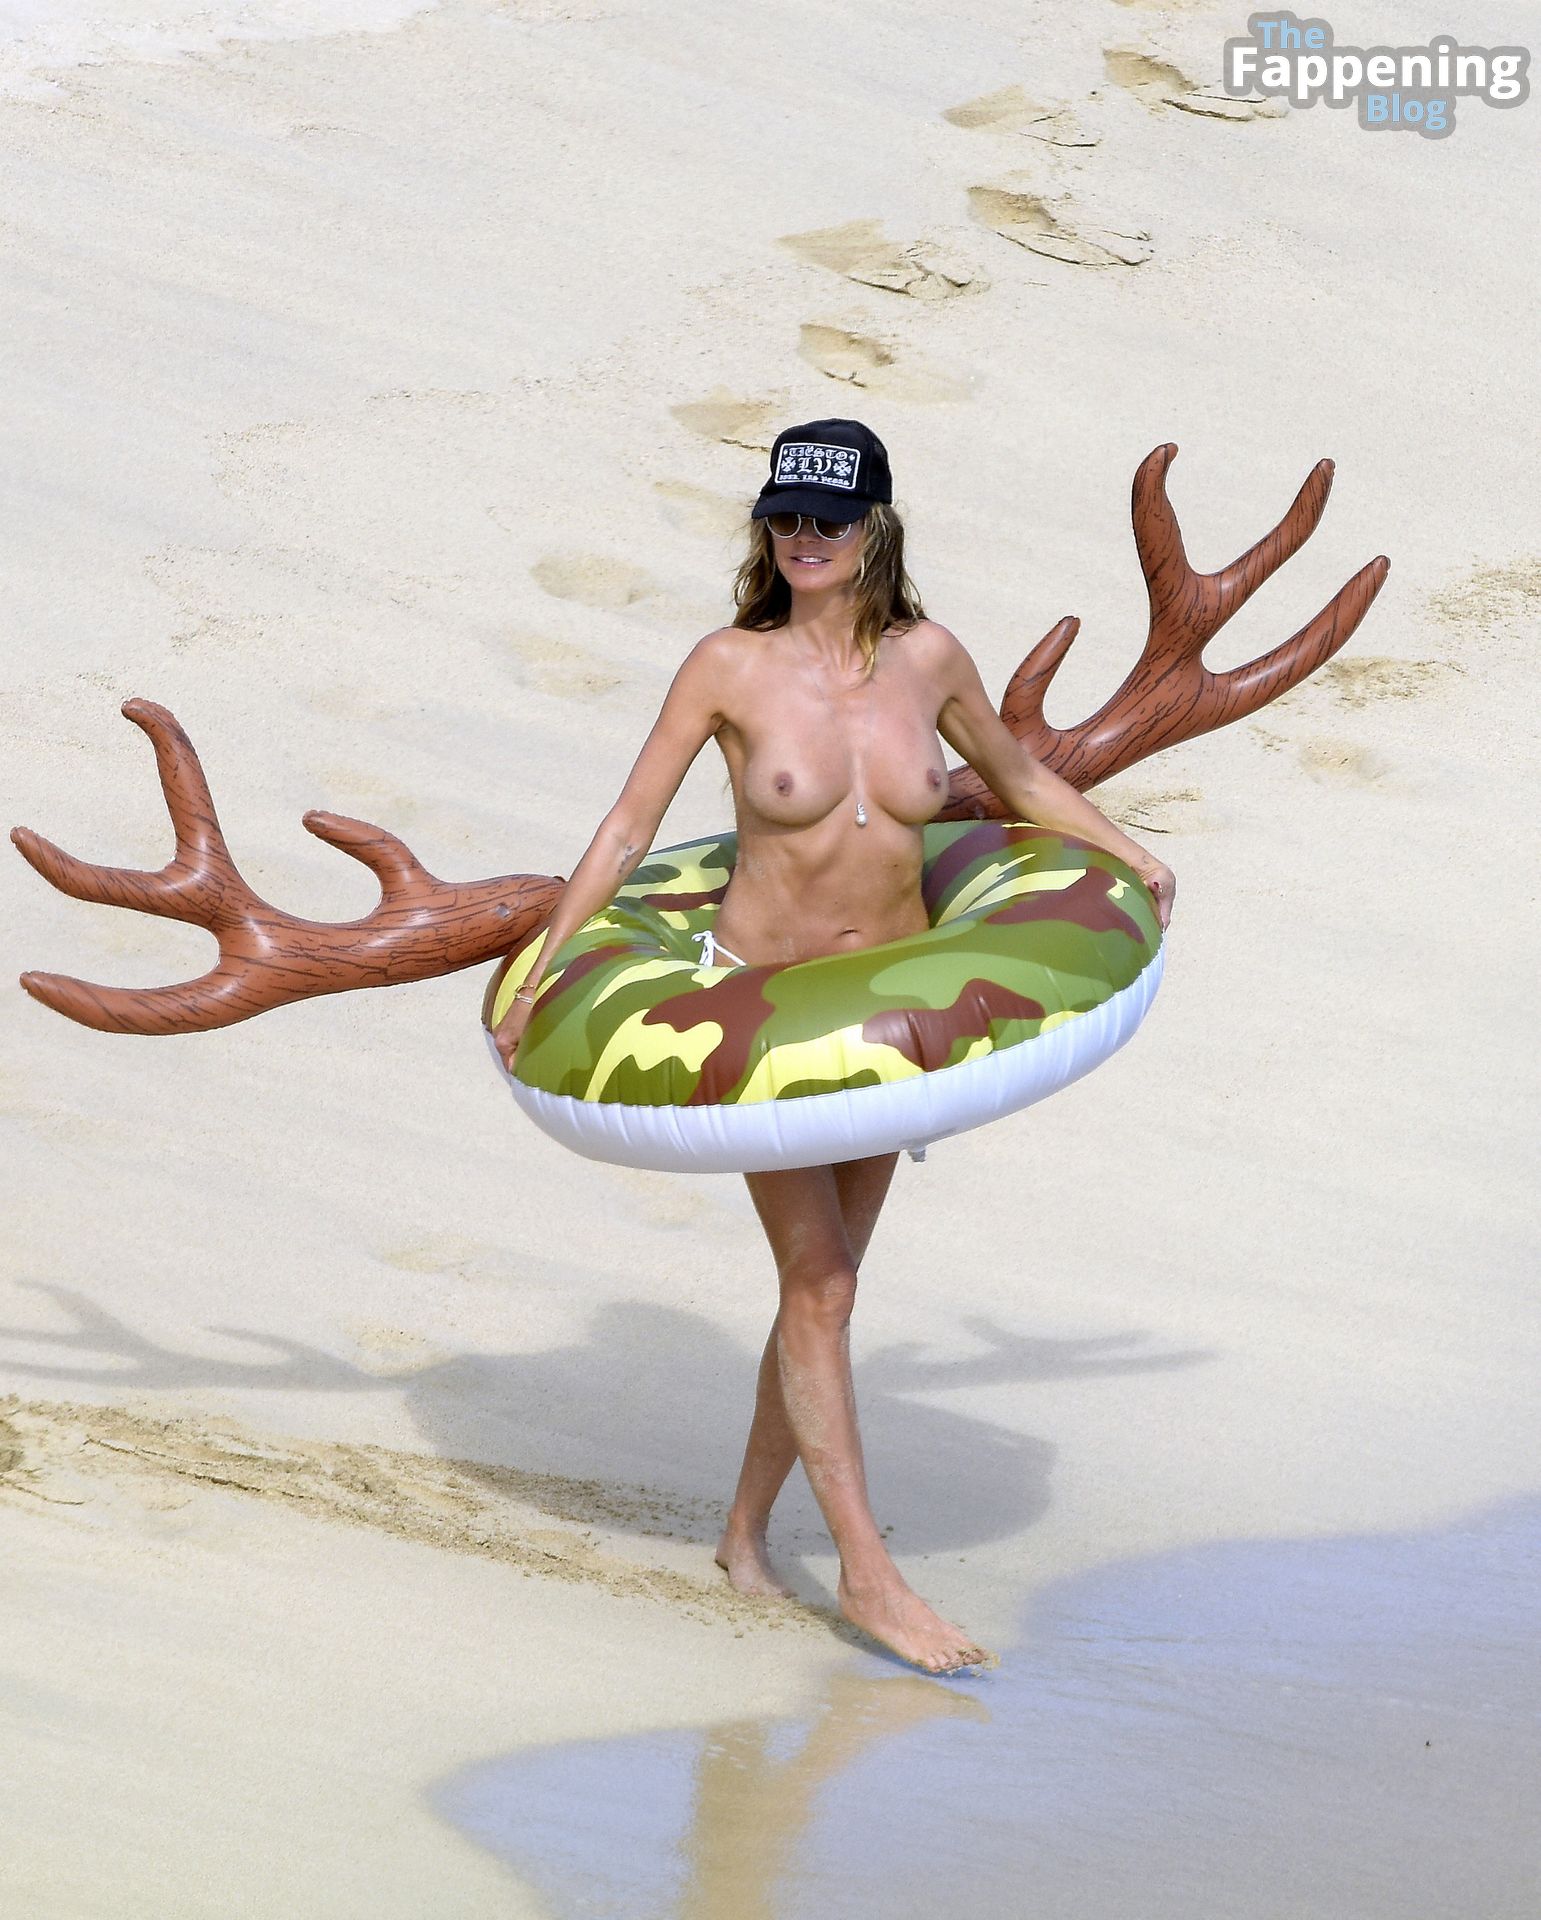 Heidi-Klum-Nude-43-The-Fappening-Blog.jpg